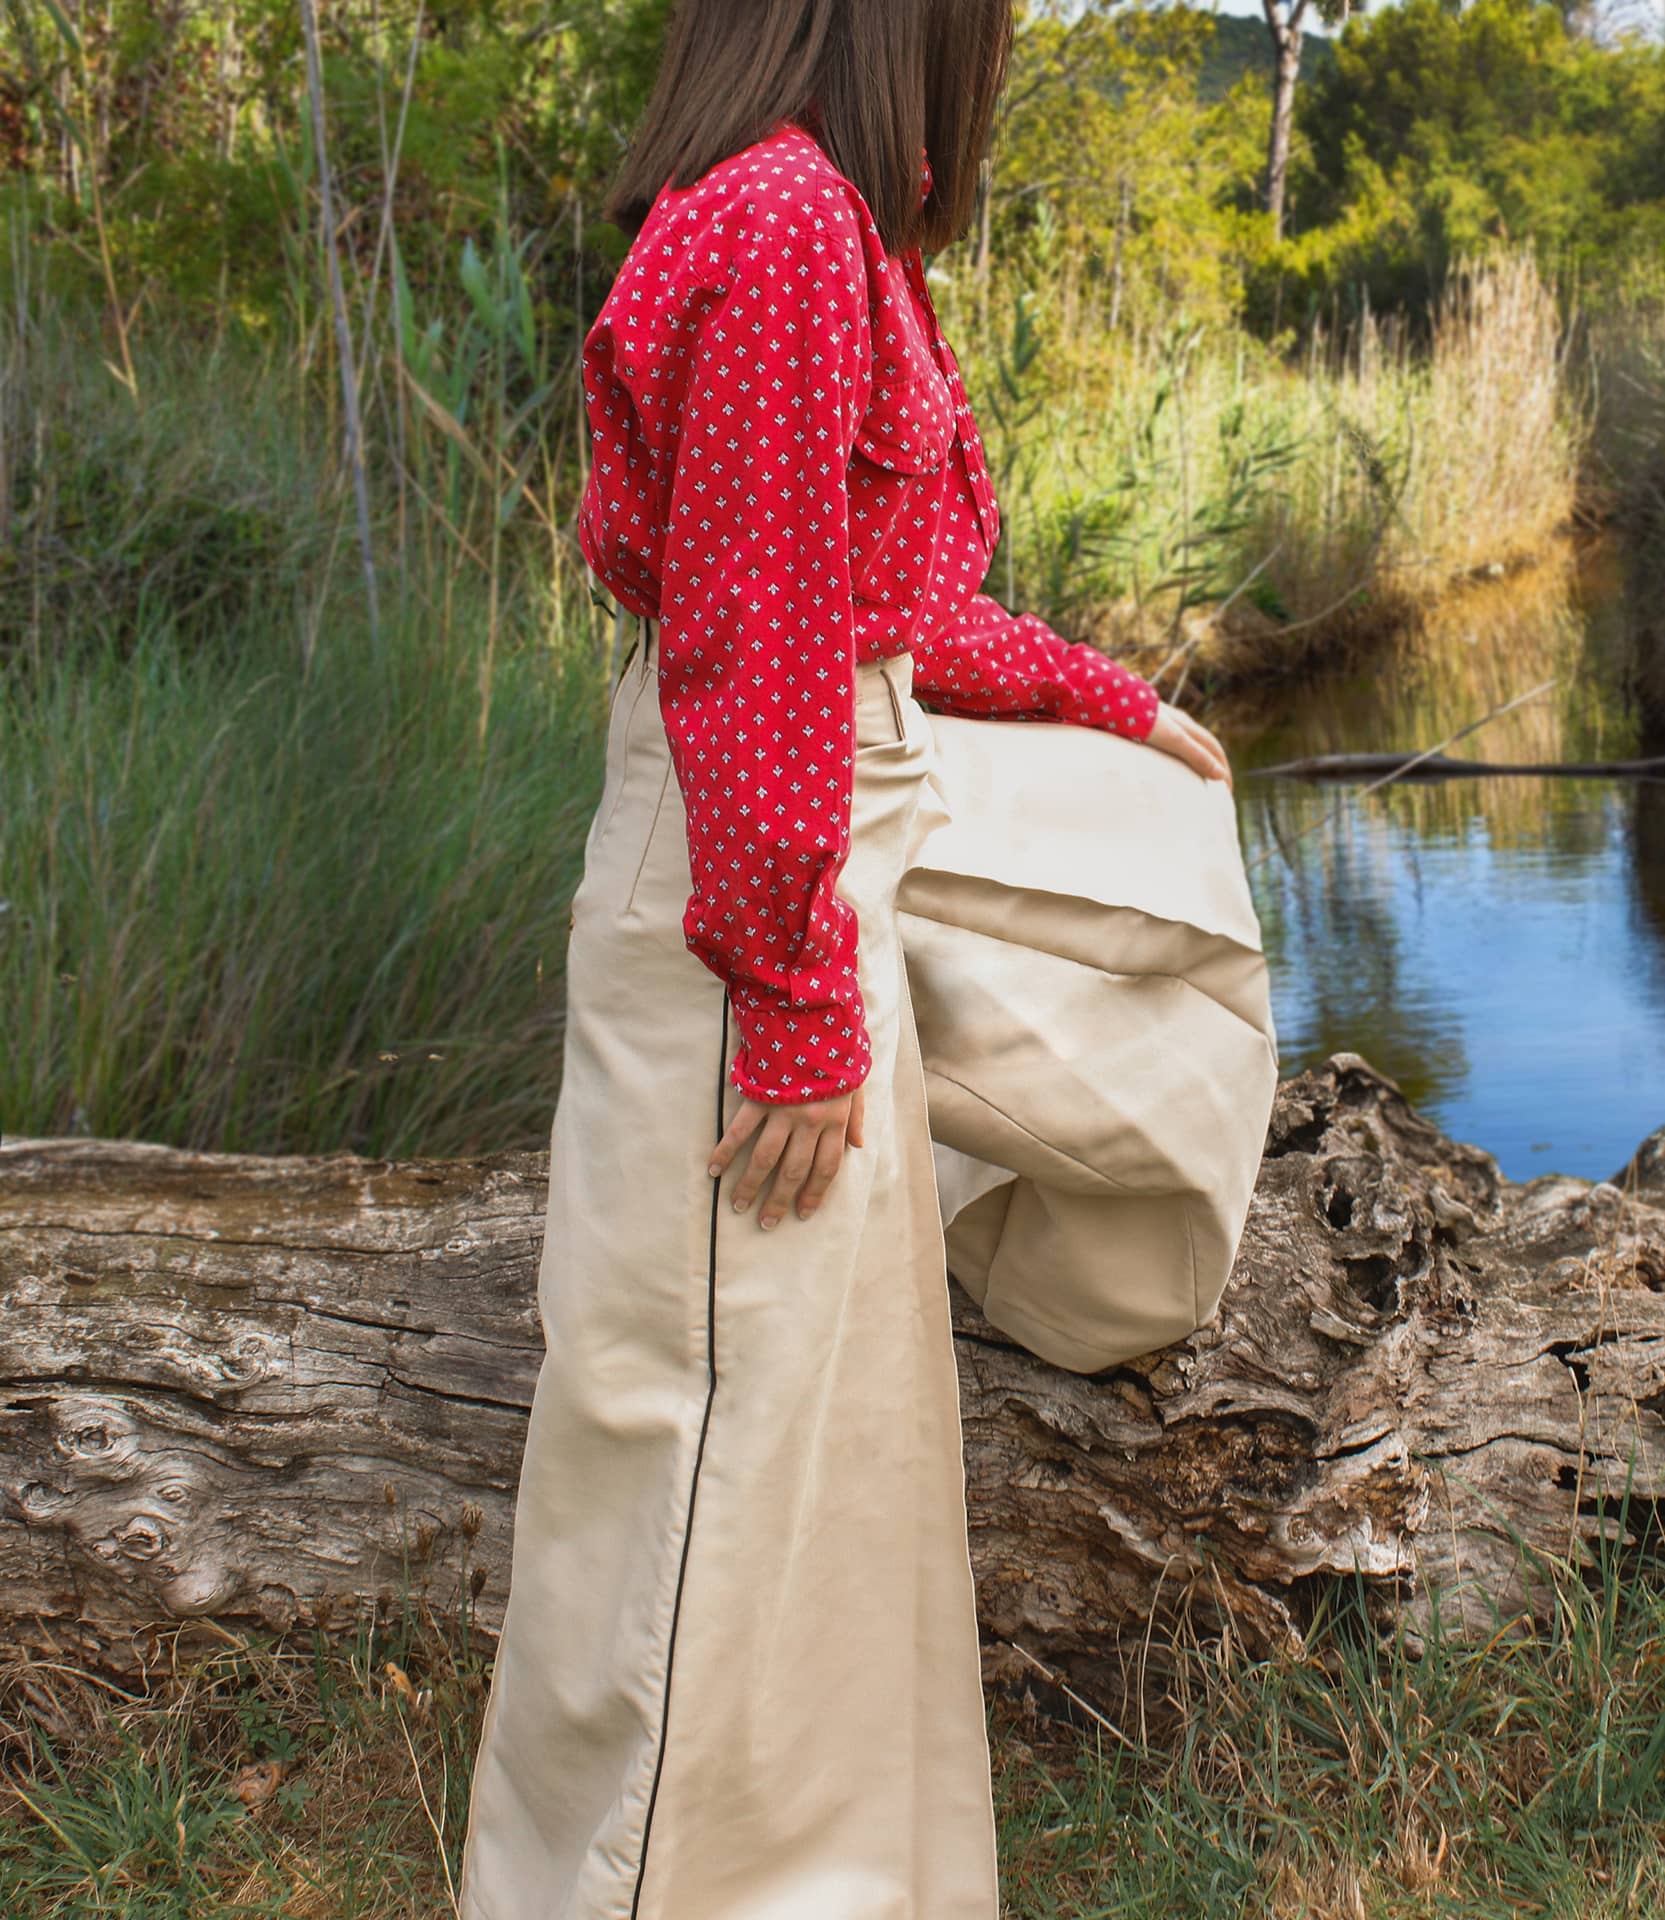 La jupe gardian traditionnelle